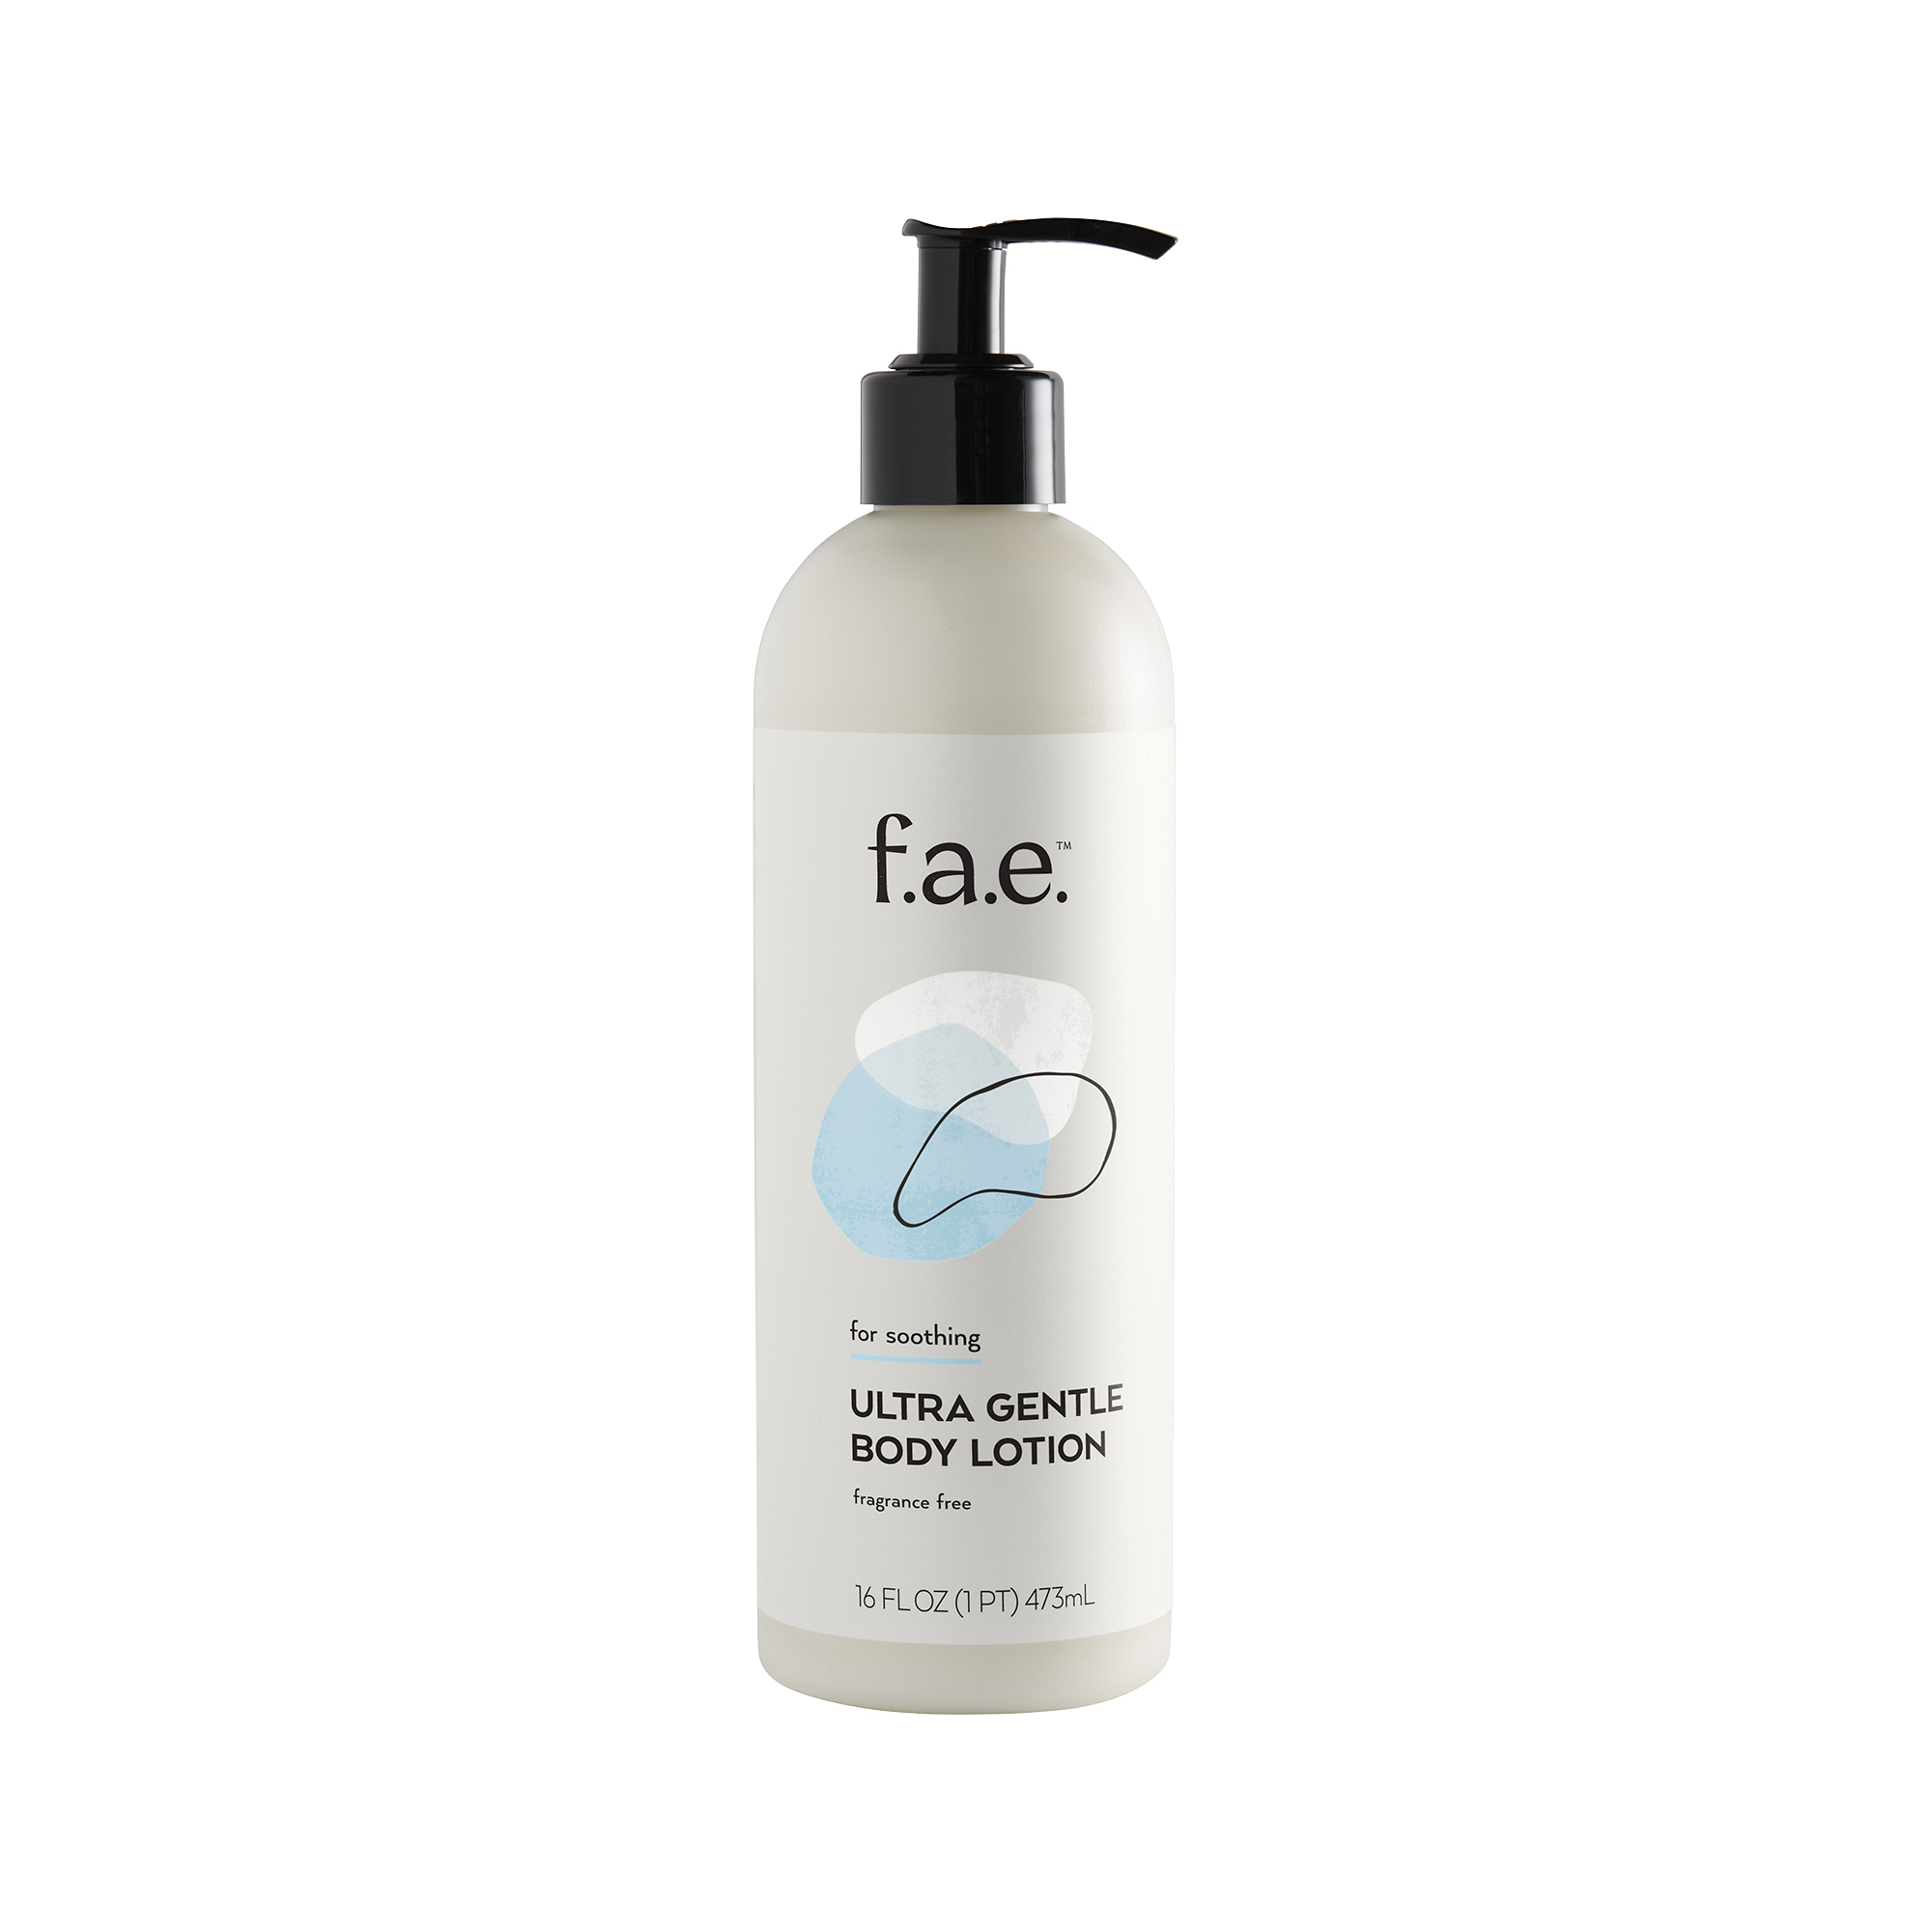 f.a.e. by Thrive Market Ultra Gentle Body Lotion, Fragrance Free 16 oz bottle